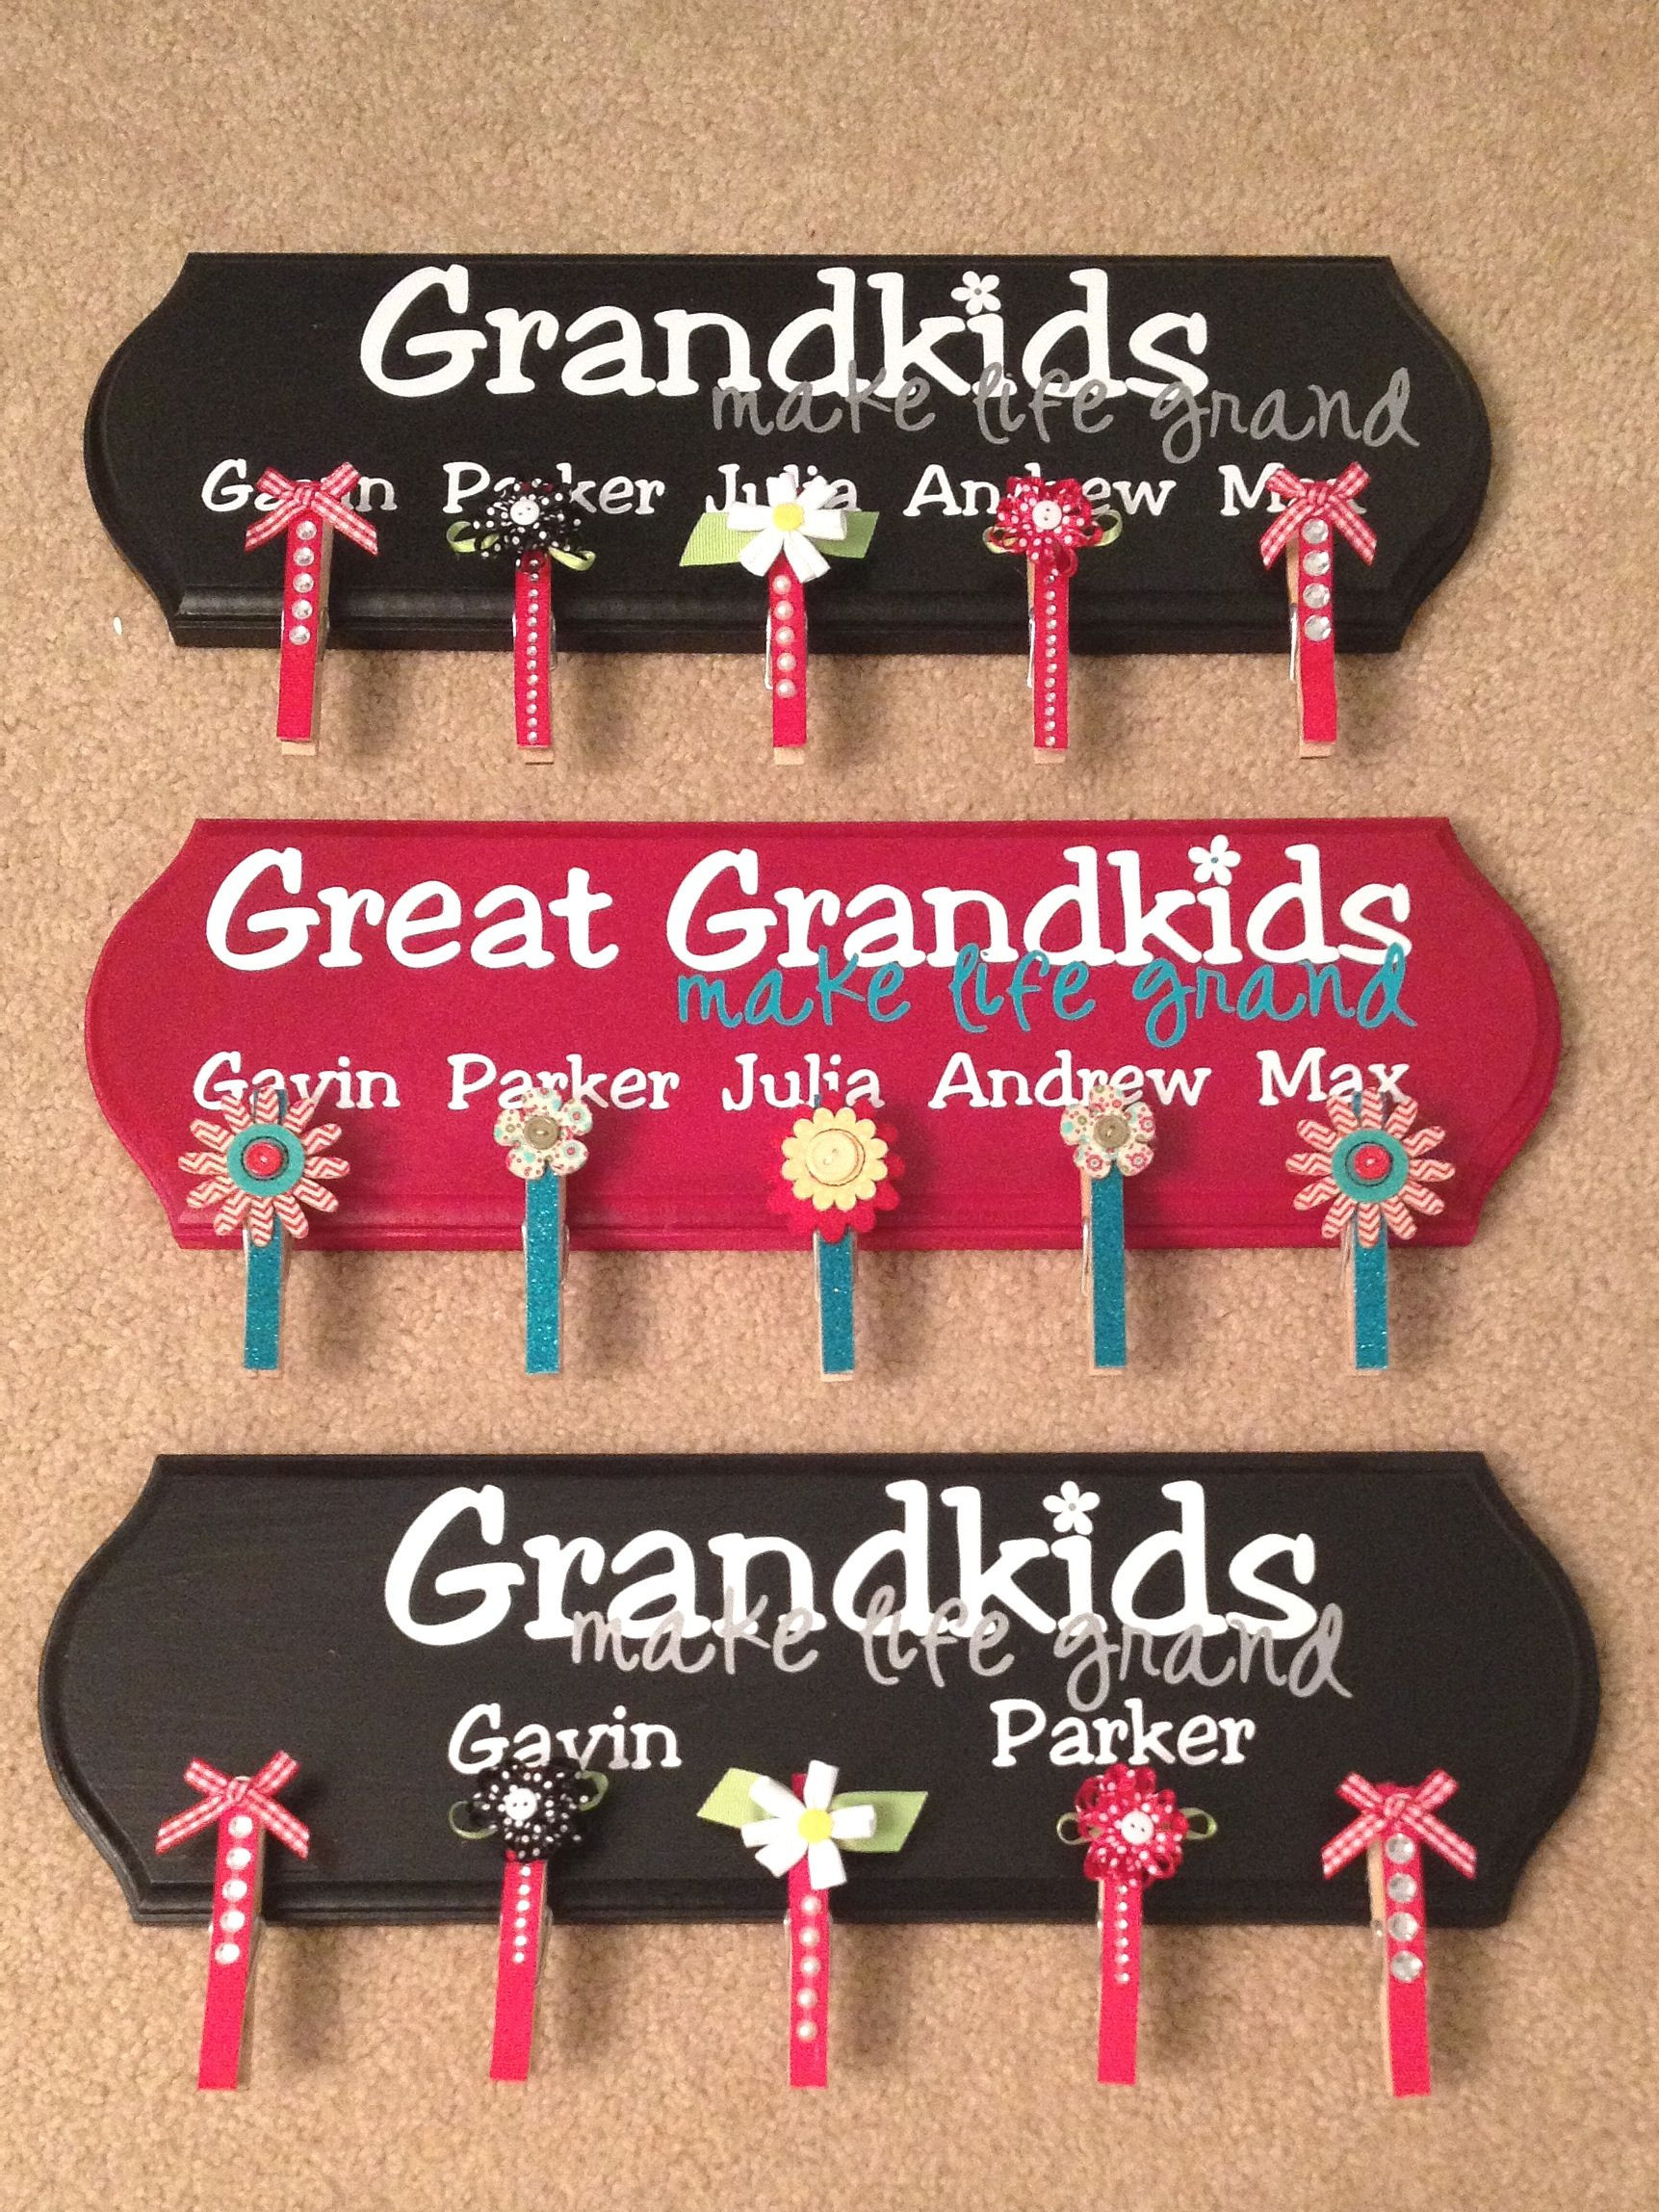 Great Grandmother Gift Ideas
 Grandma Gift Grandkids make life grand